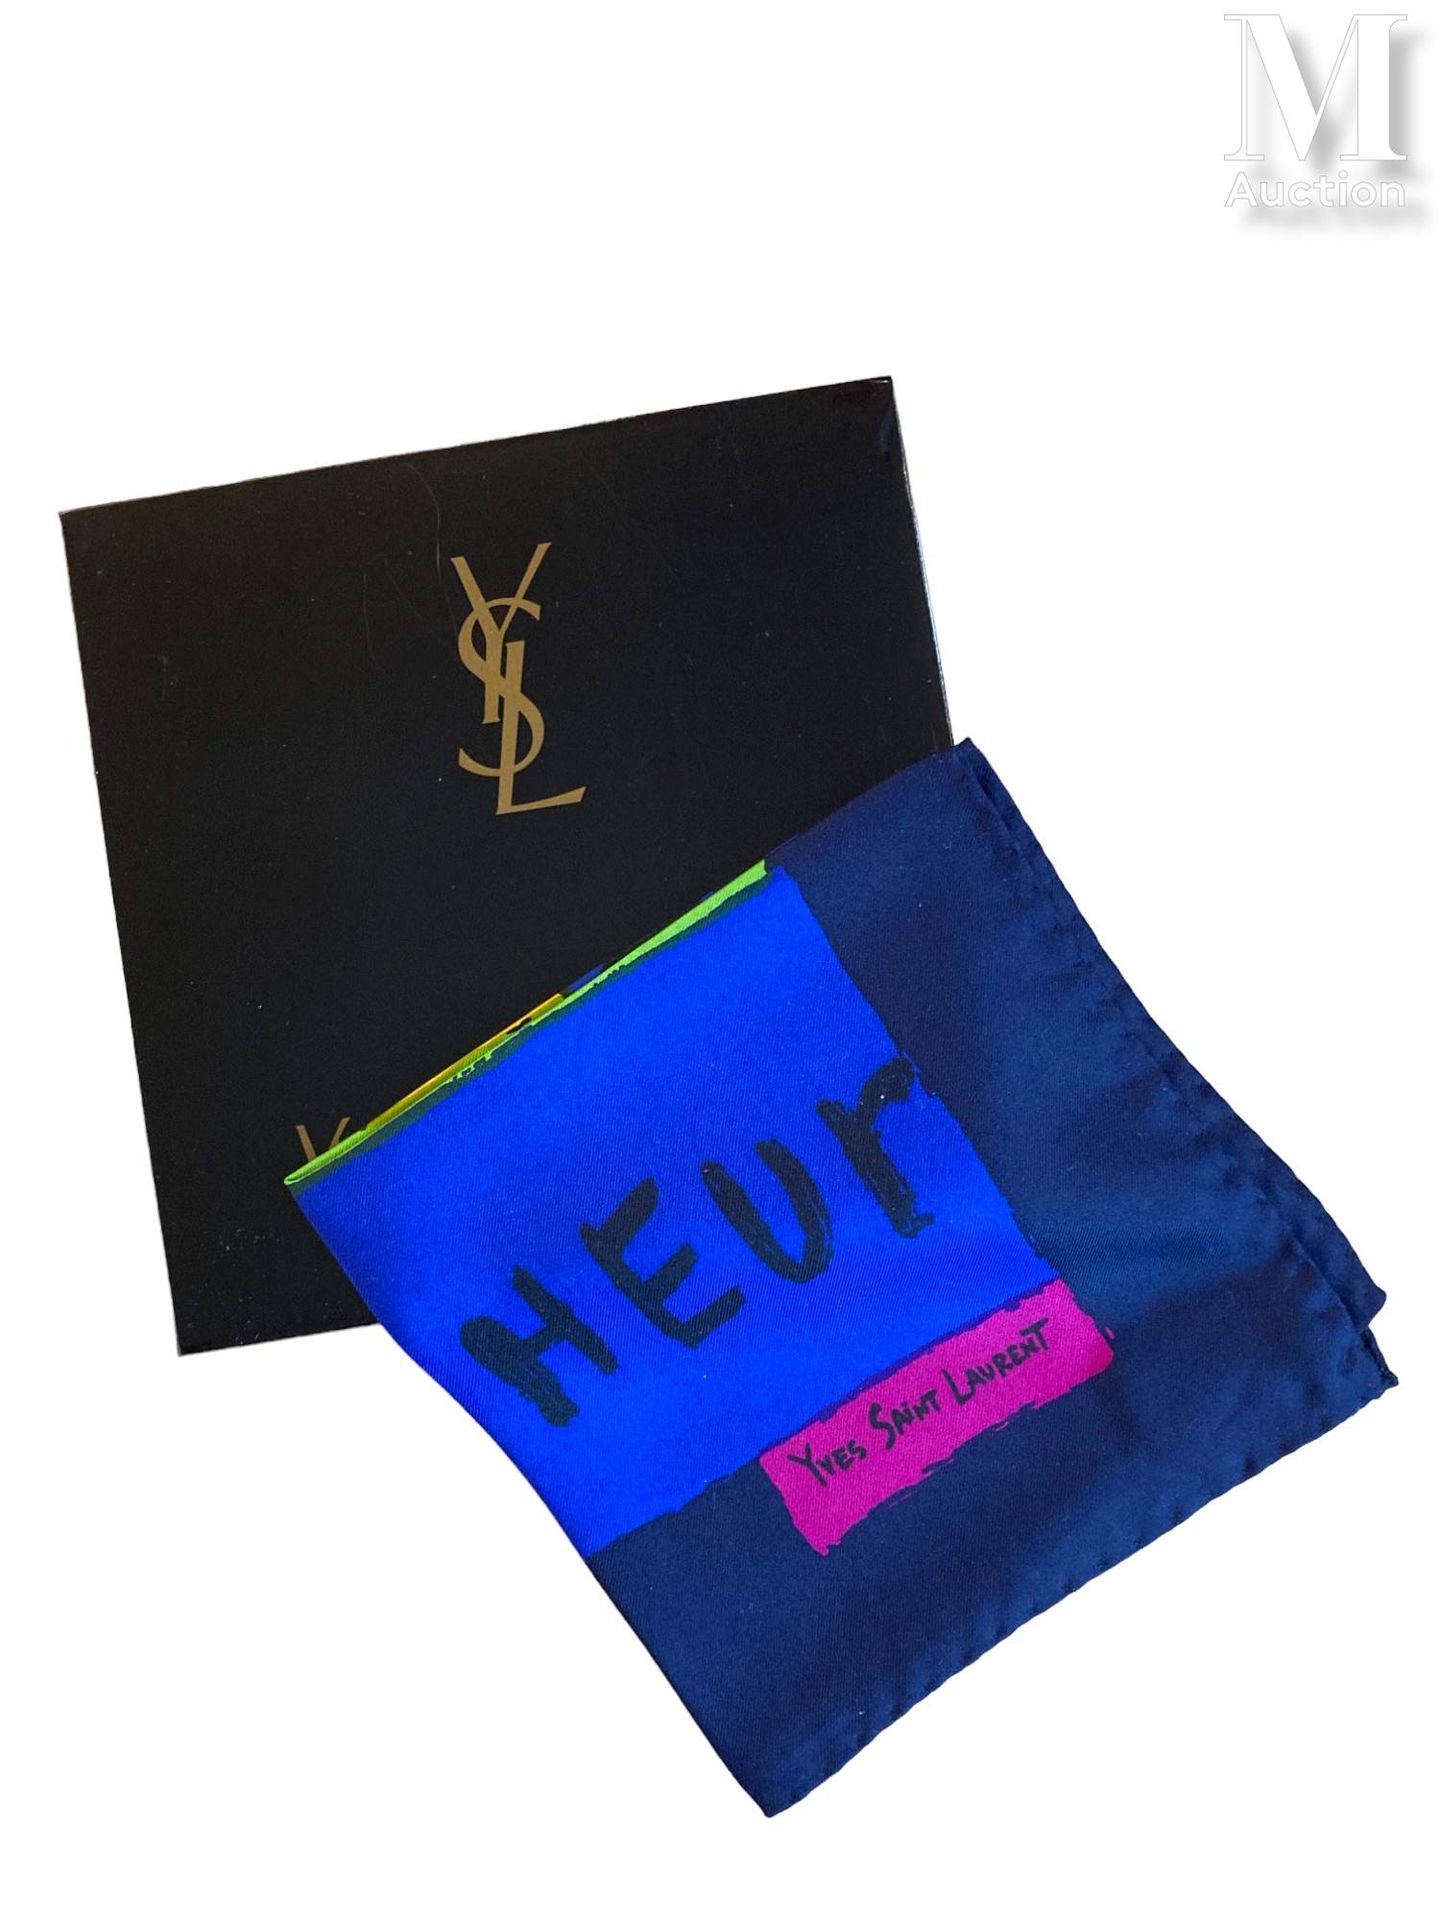 YVES SAINT LAURENT - 1980/90's 手提包
深蓝色印花丝质斜纹布，上面有多色的 "Mille vœux de bonheur "字样
&hellip;